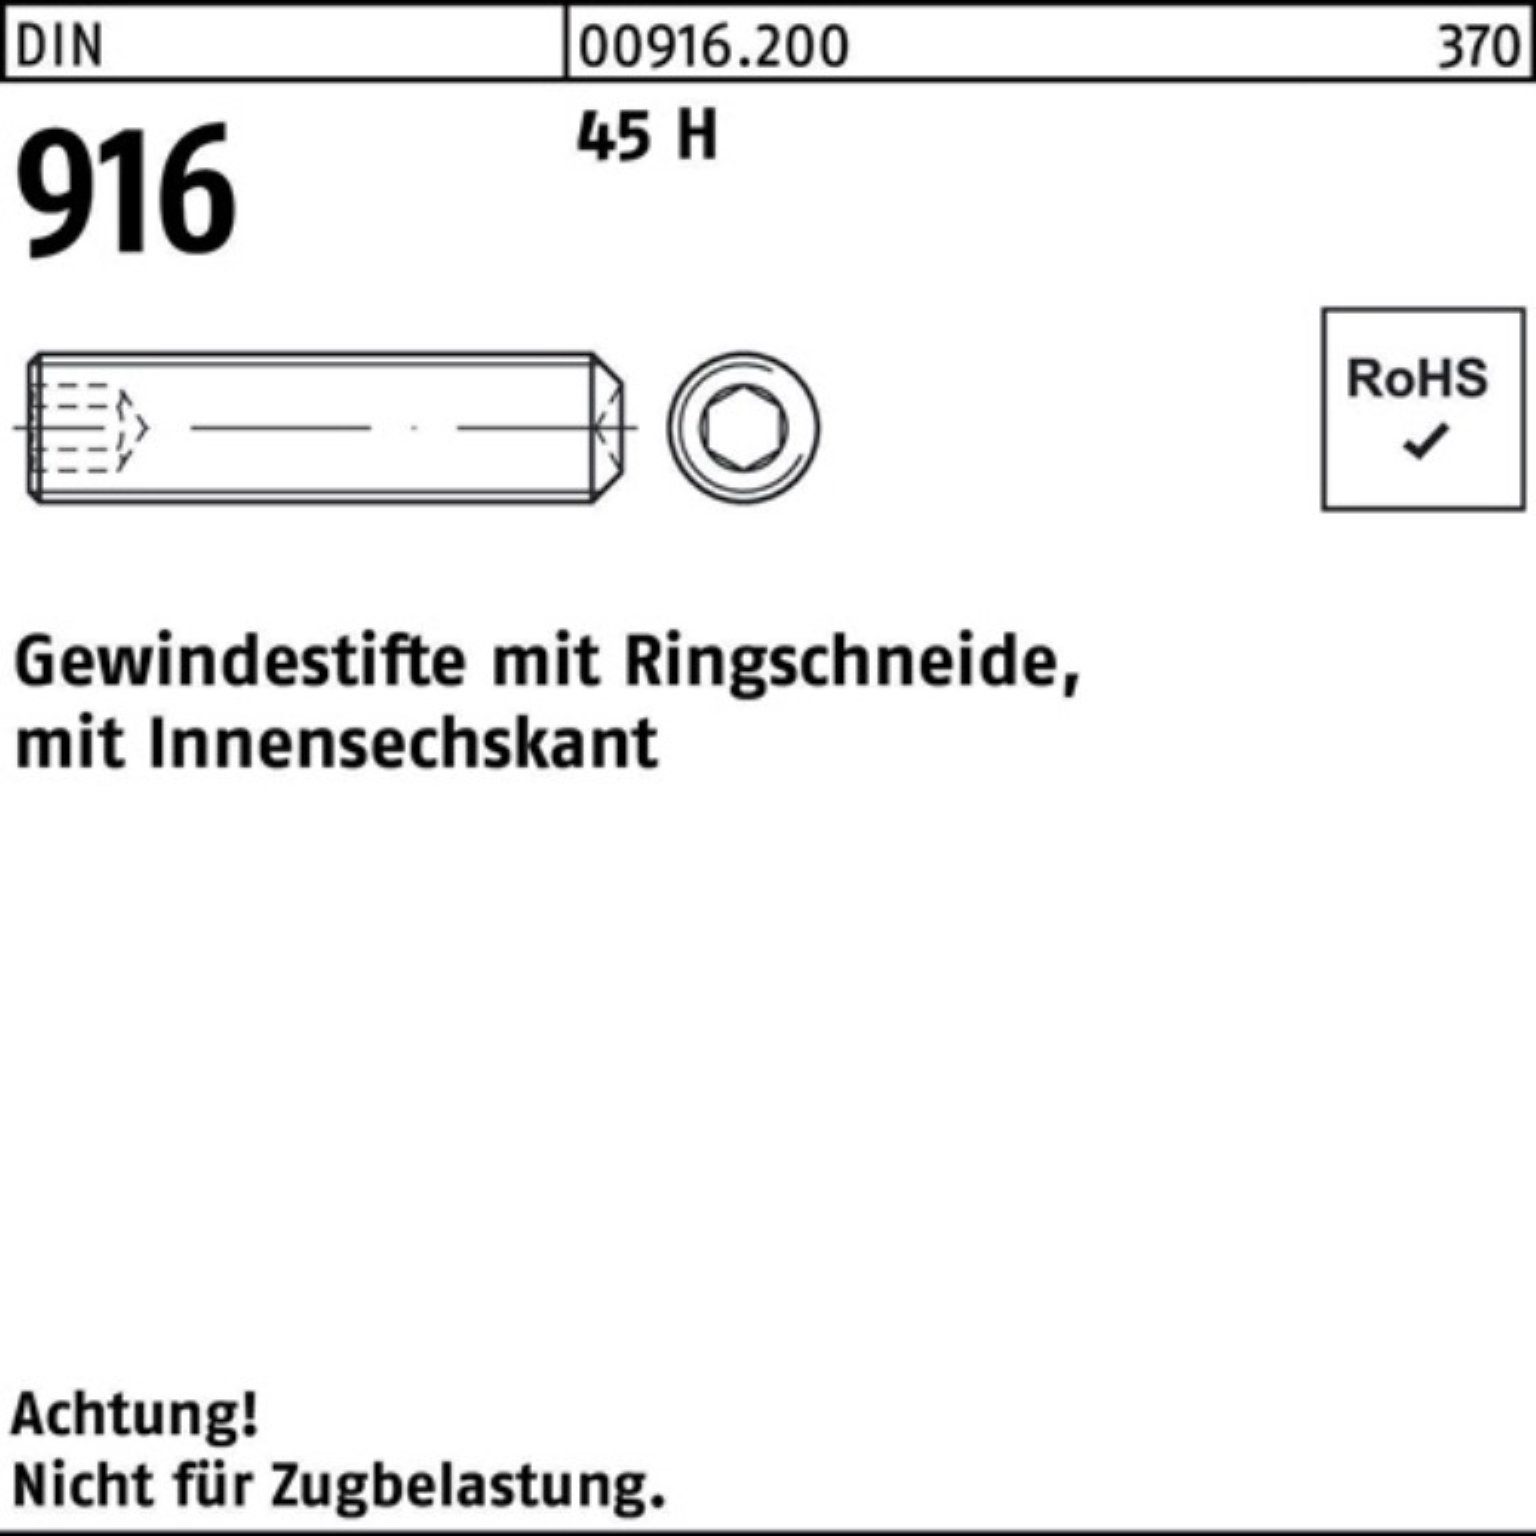 40 Pack Gewindestift Gewindebolzen 100er H Ringschn./Innen-6kt 100 M10x Reyher DIN 45 S 916